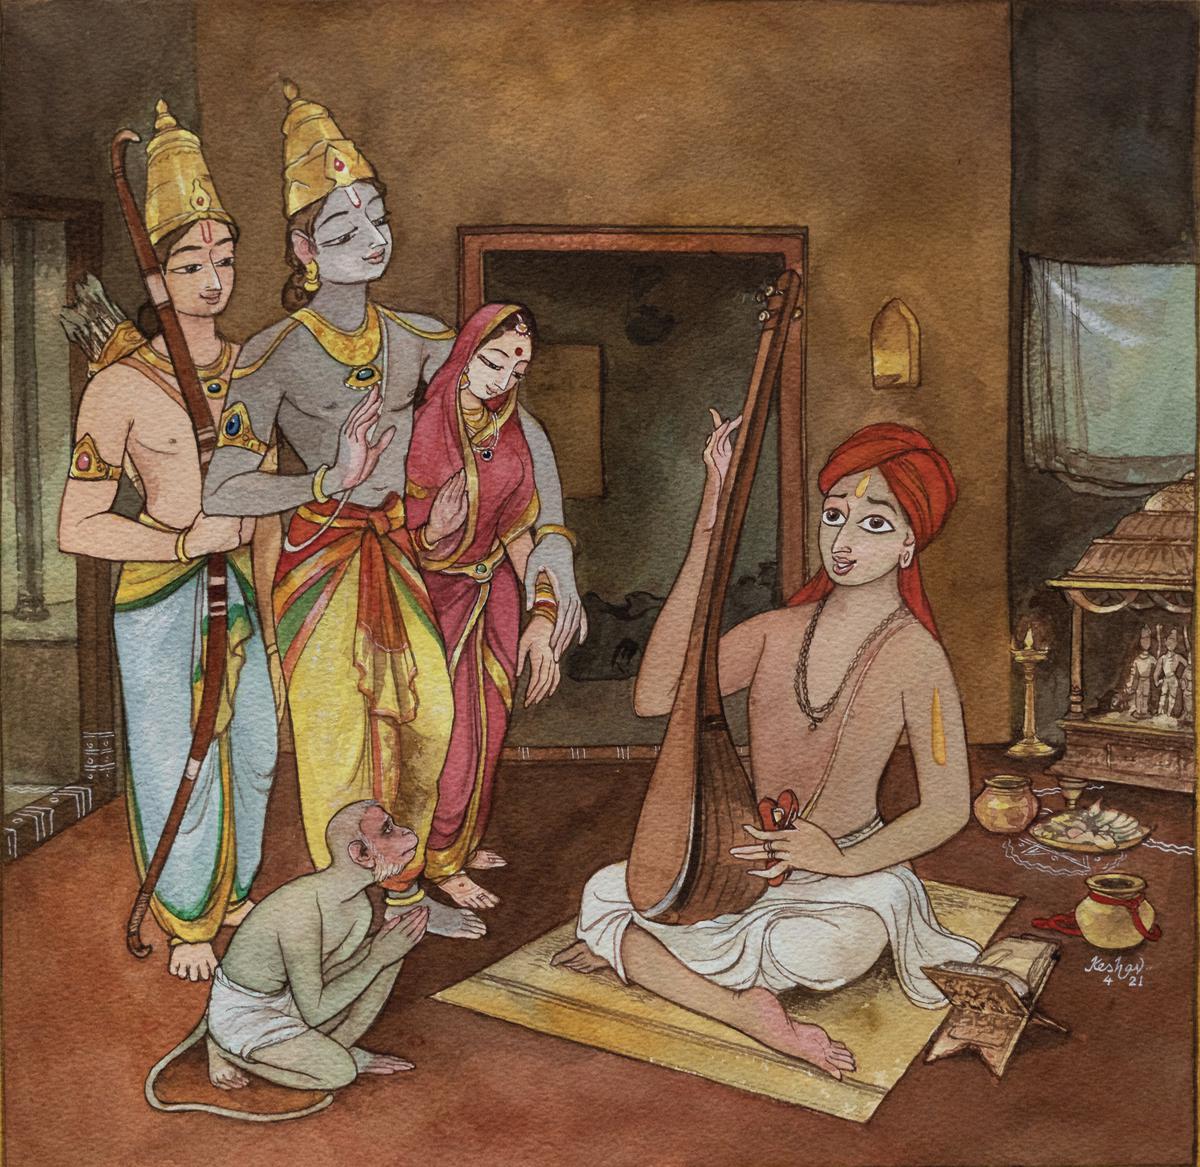 Tyagaraja has the darshan of Sri Rama, Sita, Lakshmana and Hanuman while he composes a kriti